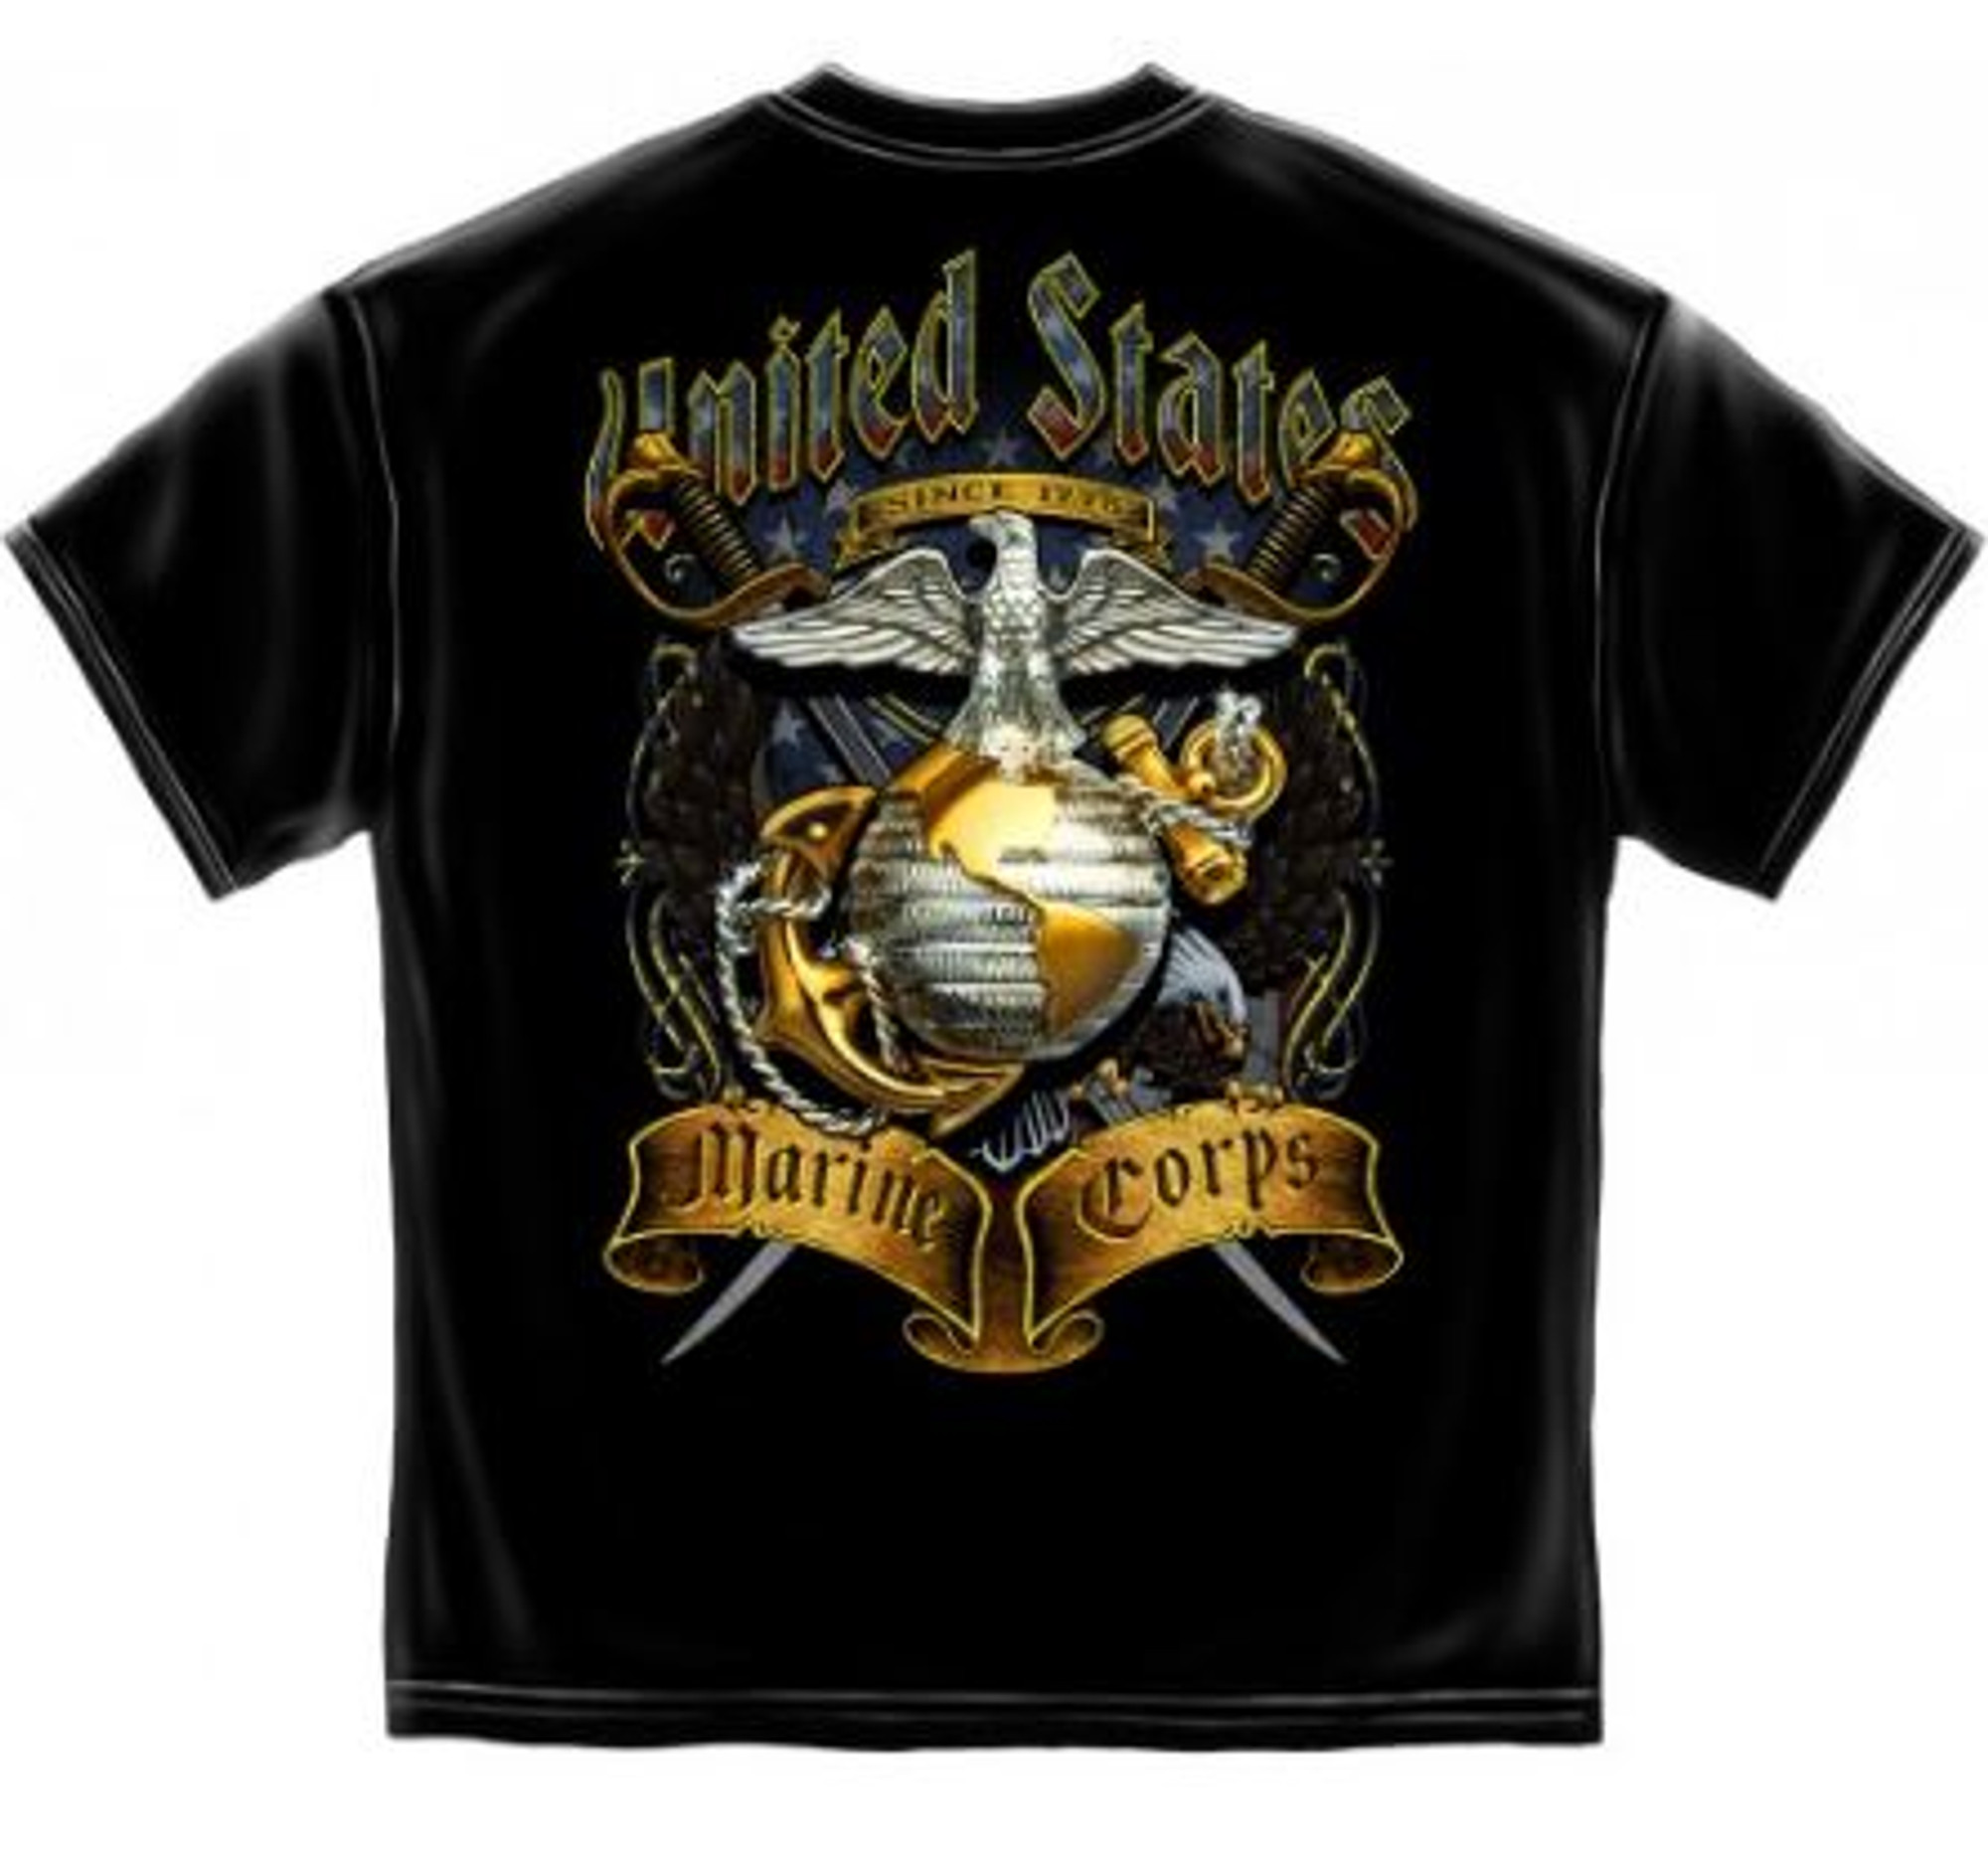 USMC "Crossed Swords" T-Shirt